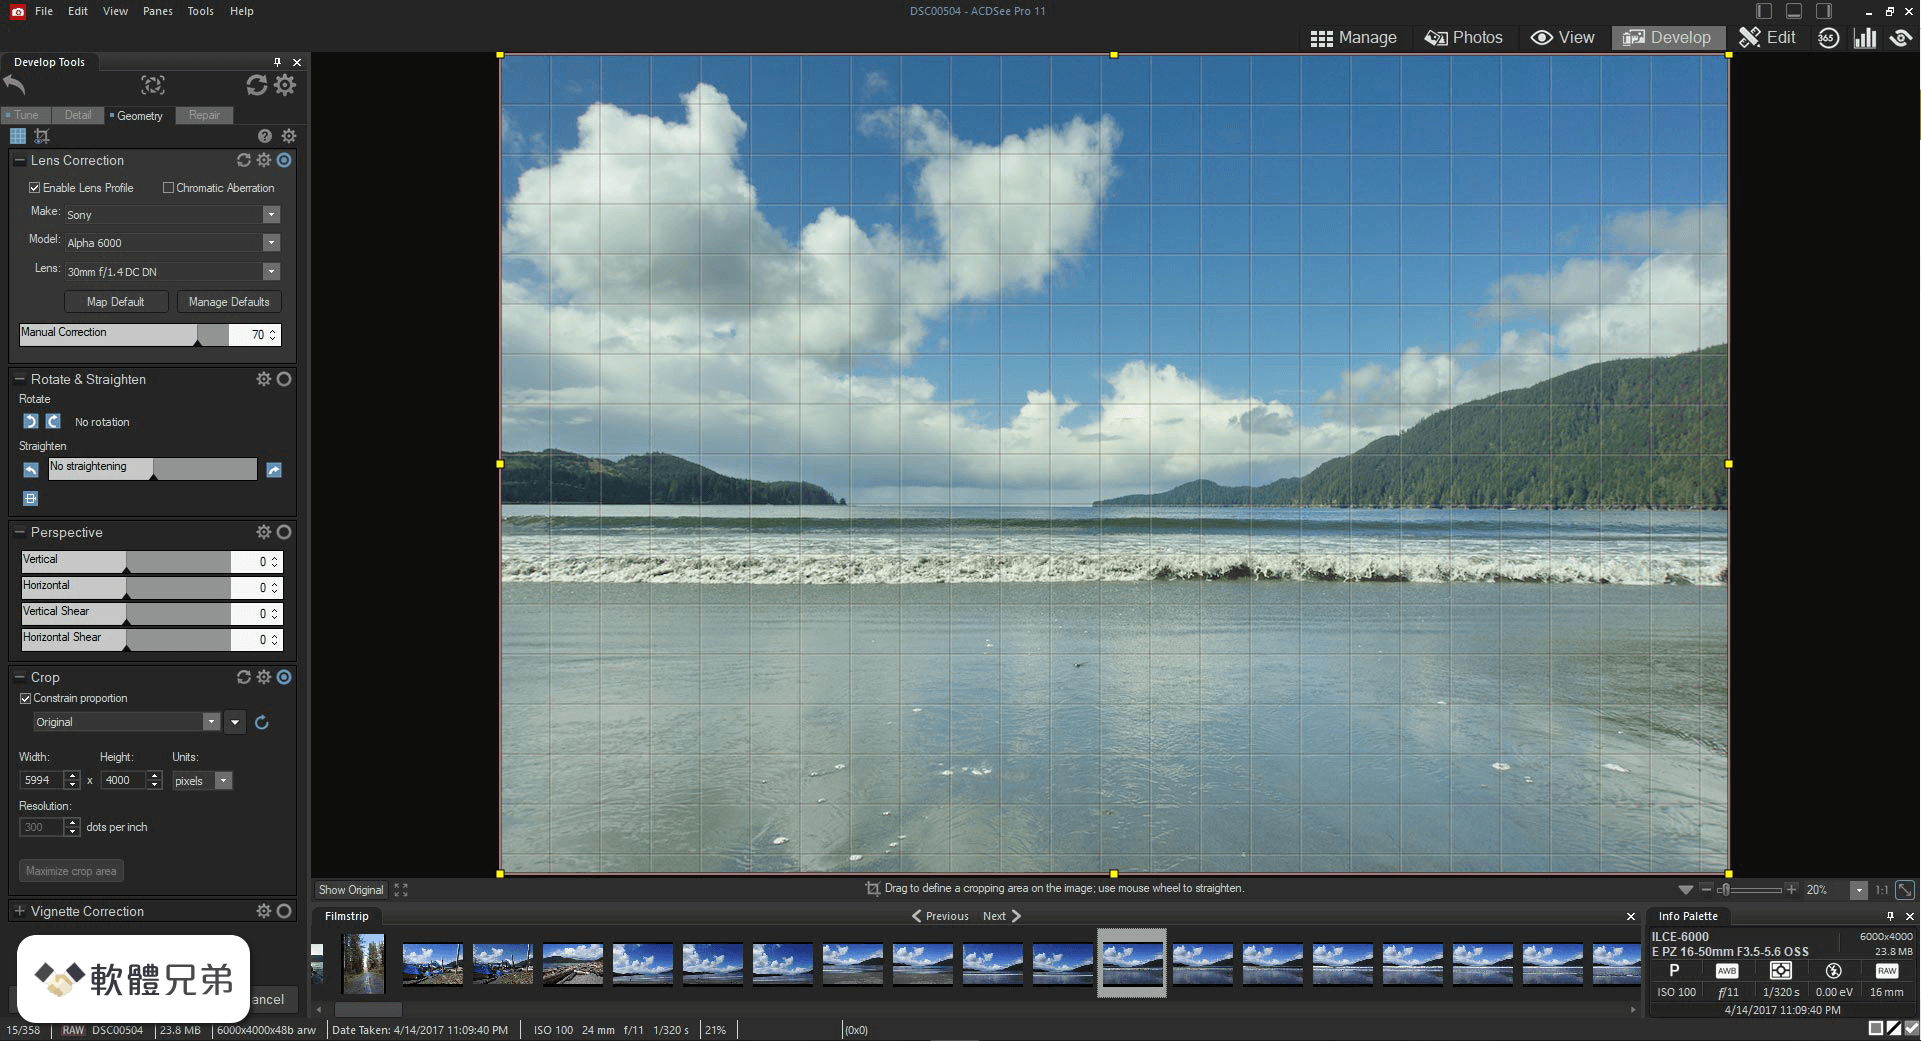 ACDSee Photo Studio Professional (64-bit) Screenshot 3